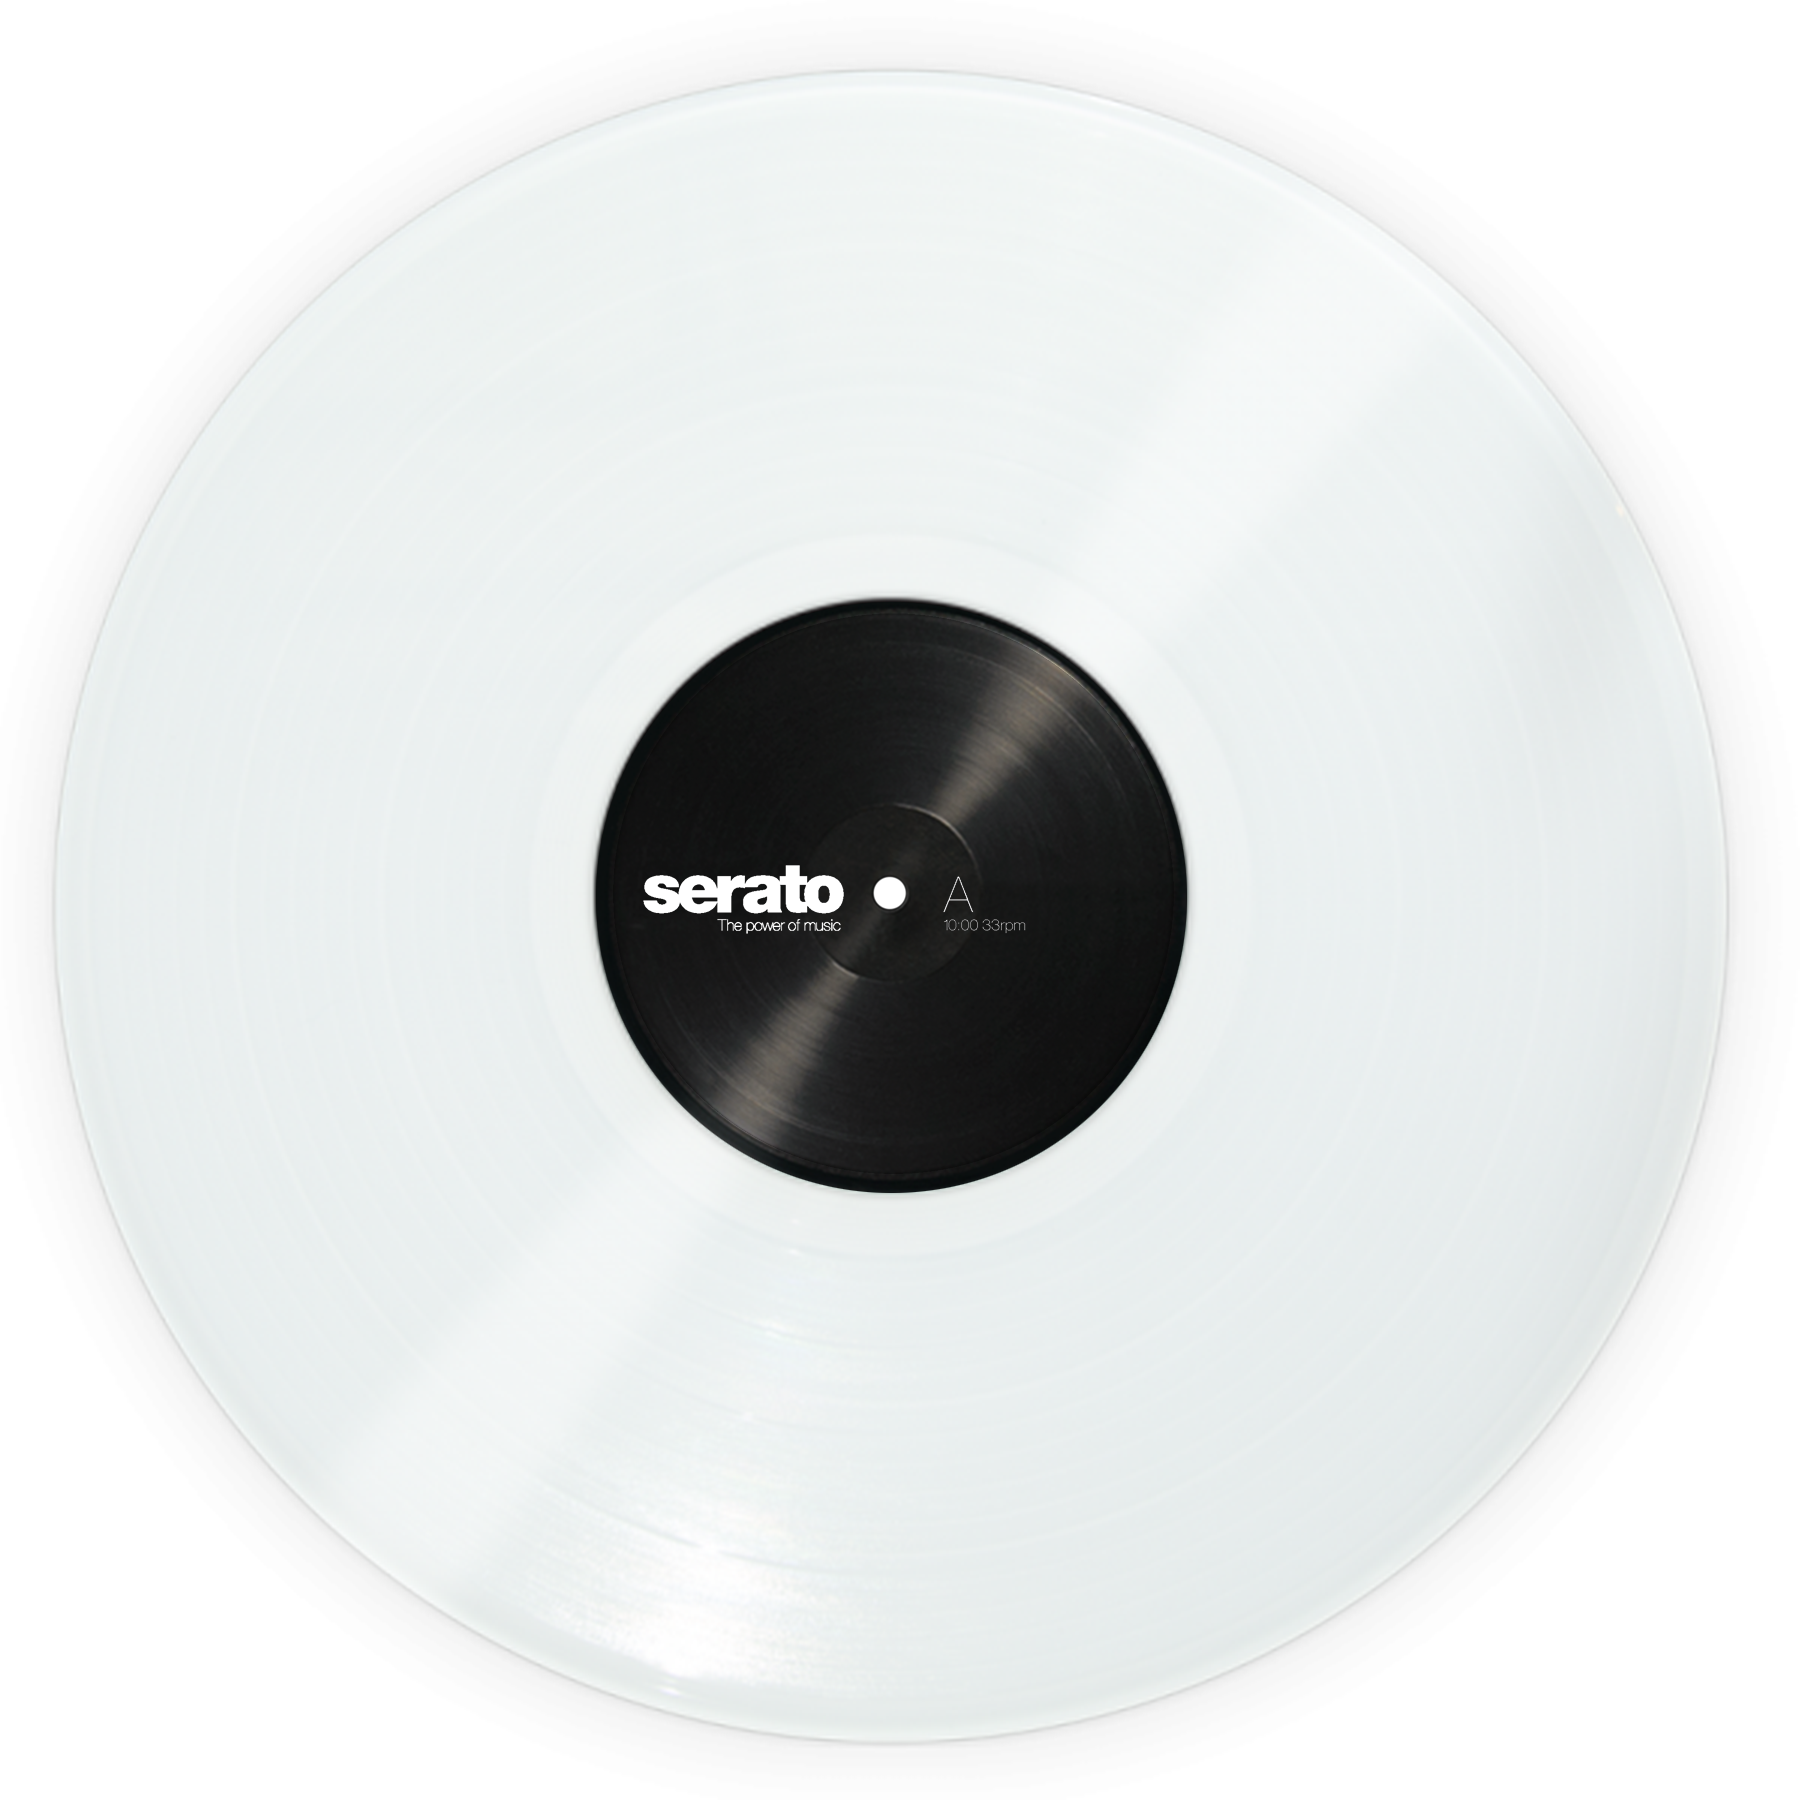 Serato 12" Control Vinyl Performance Series (пара) - Clear по цене 4 870 ₽